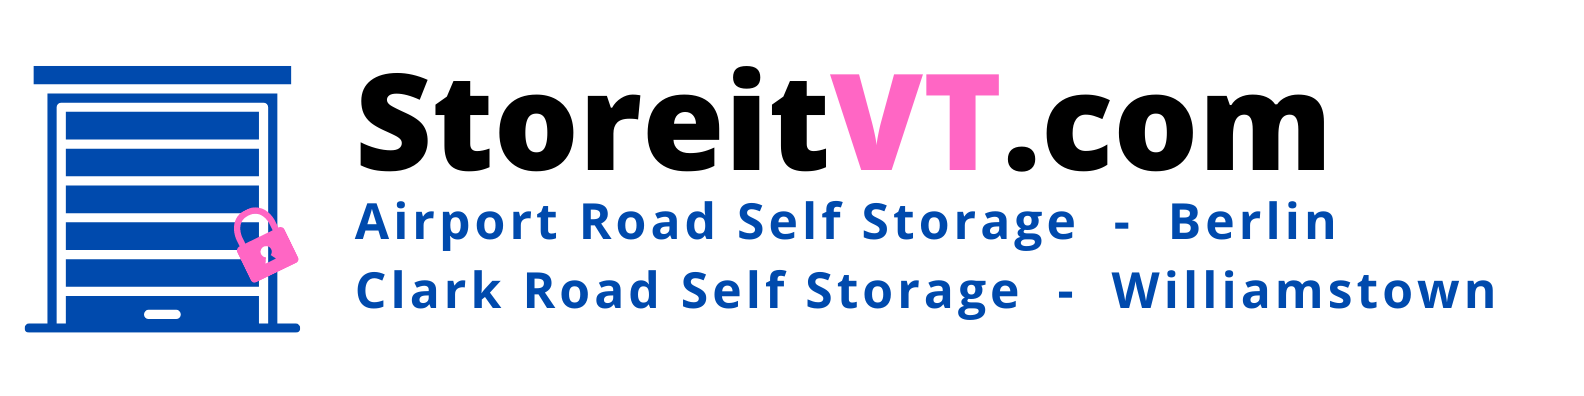 Airport RD VT self storage logo